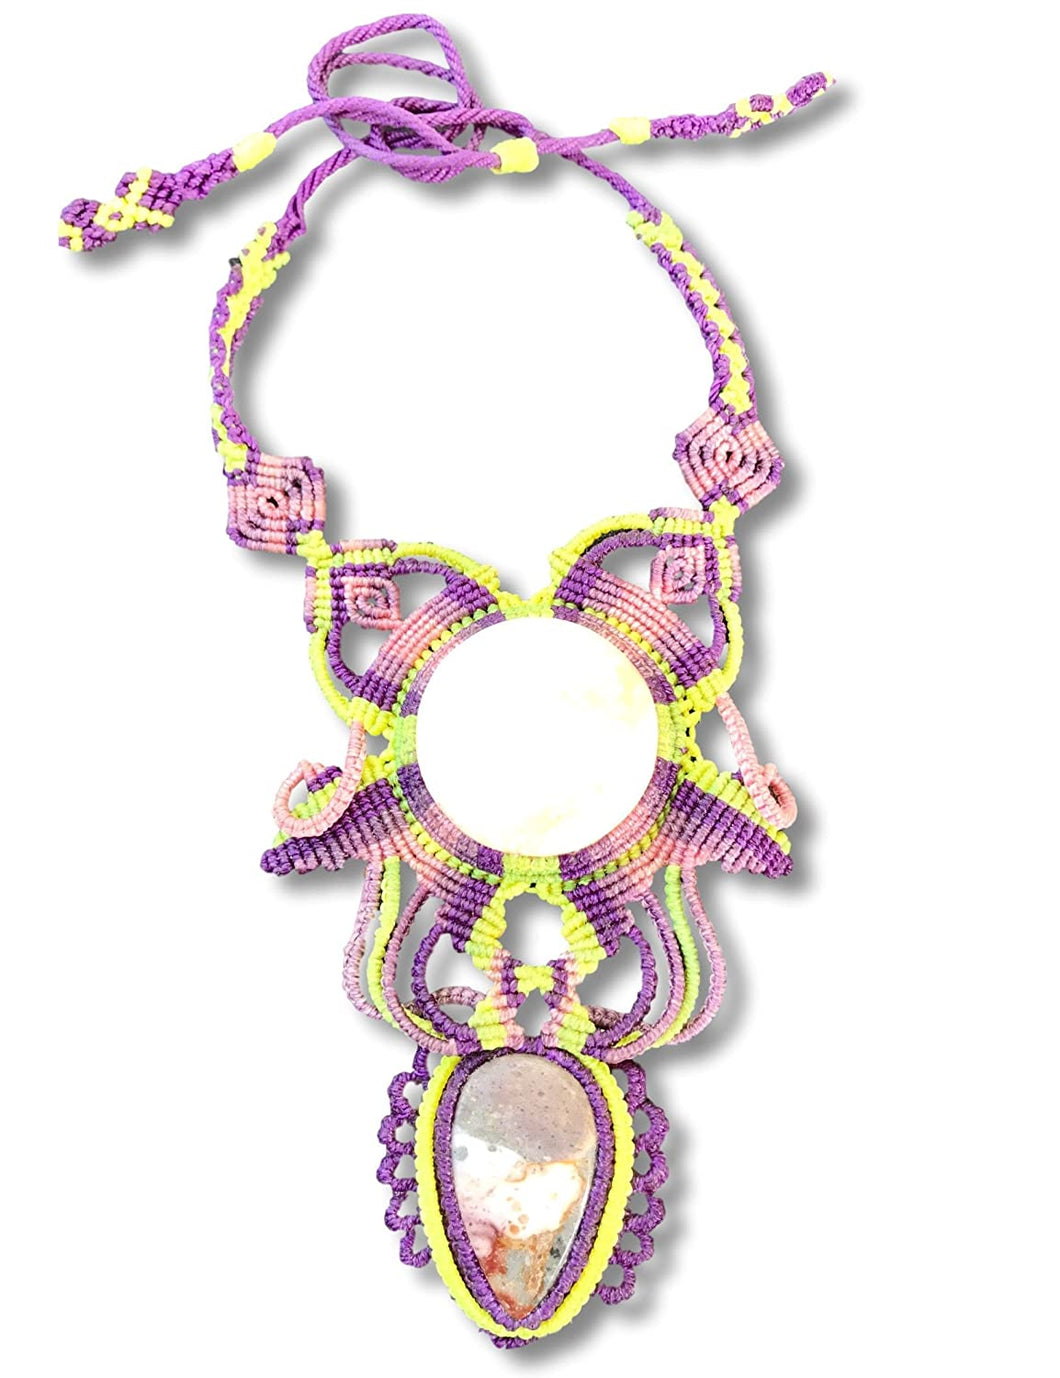 Handmade Macrame Necklace with Onyx & Jasper Stones